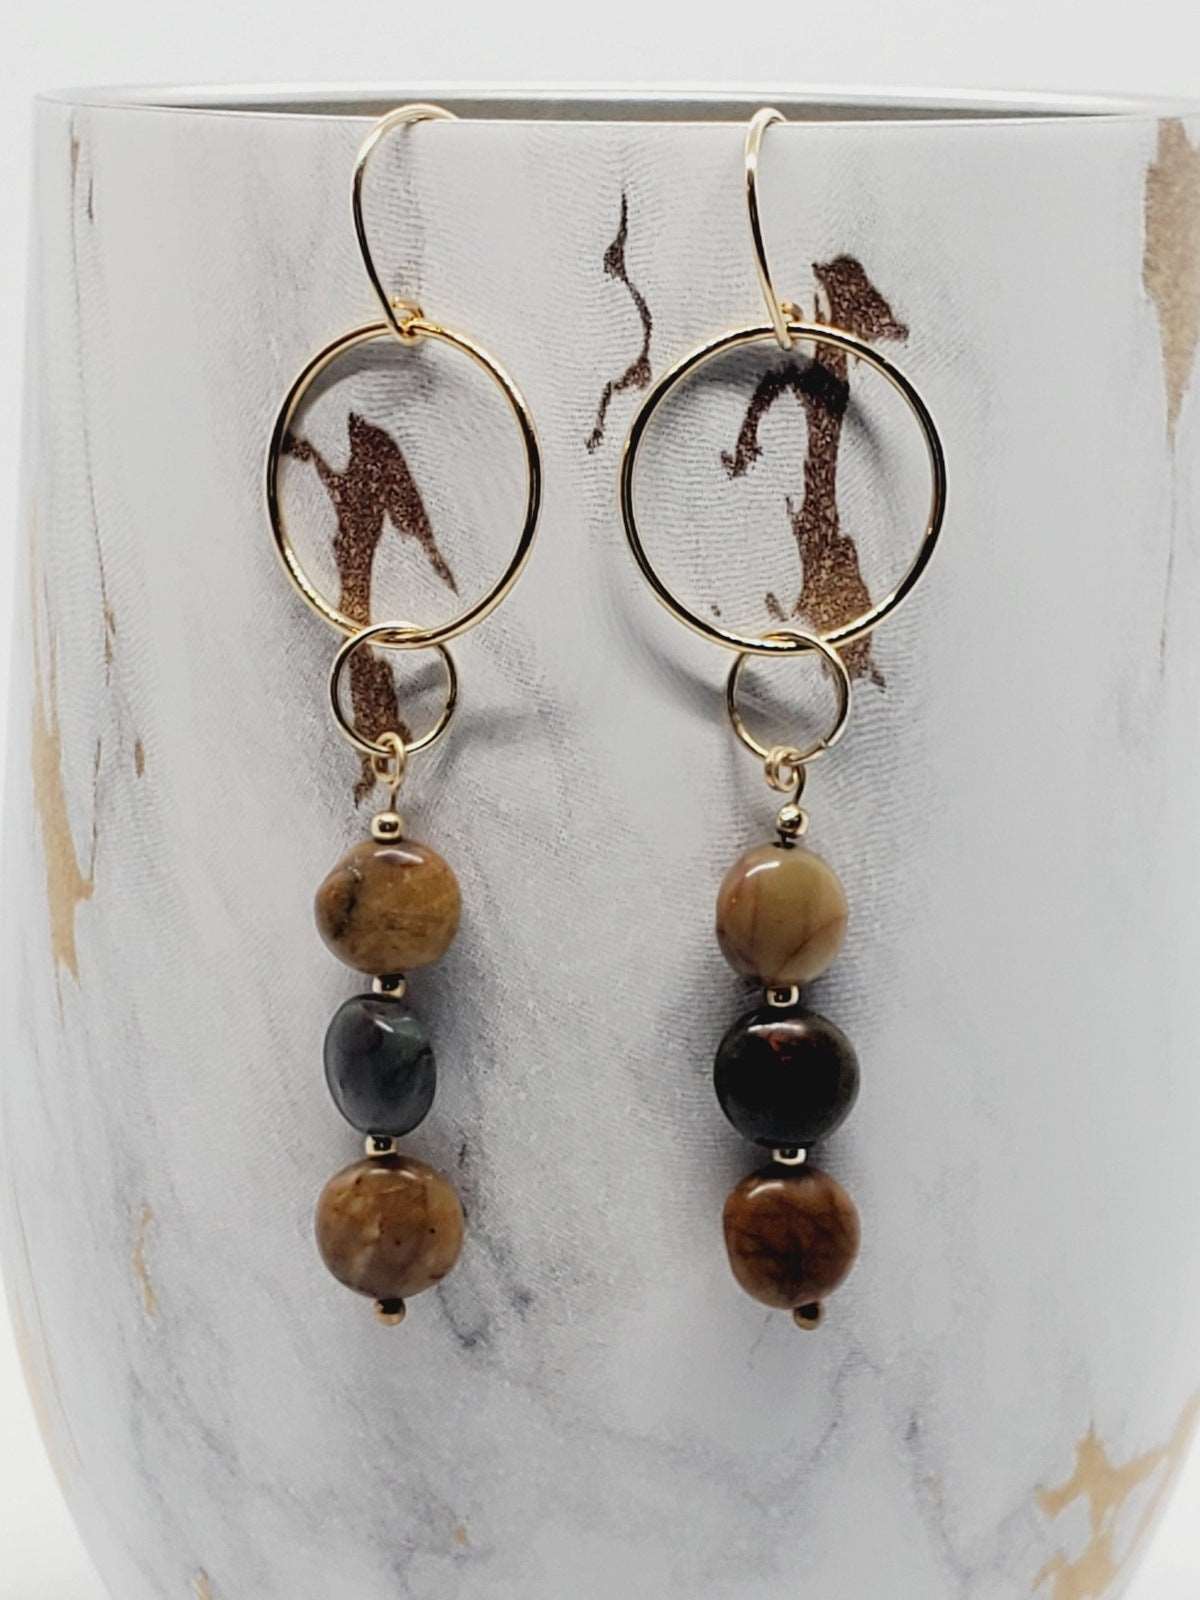 Earrings on cup, handmade earrings, pebble earrings, earrings of nature, Zoe Drop Earrings